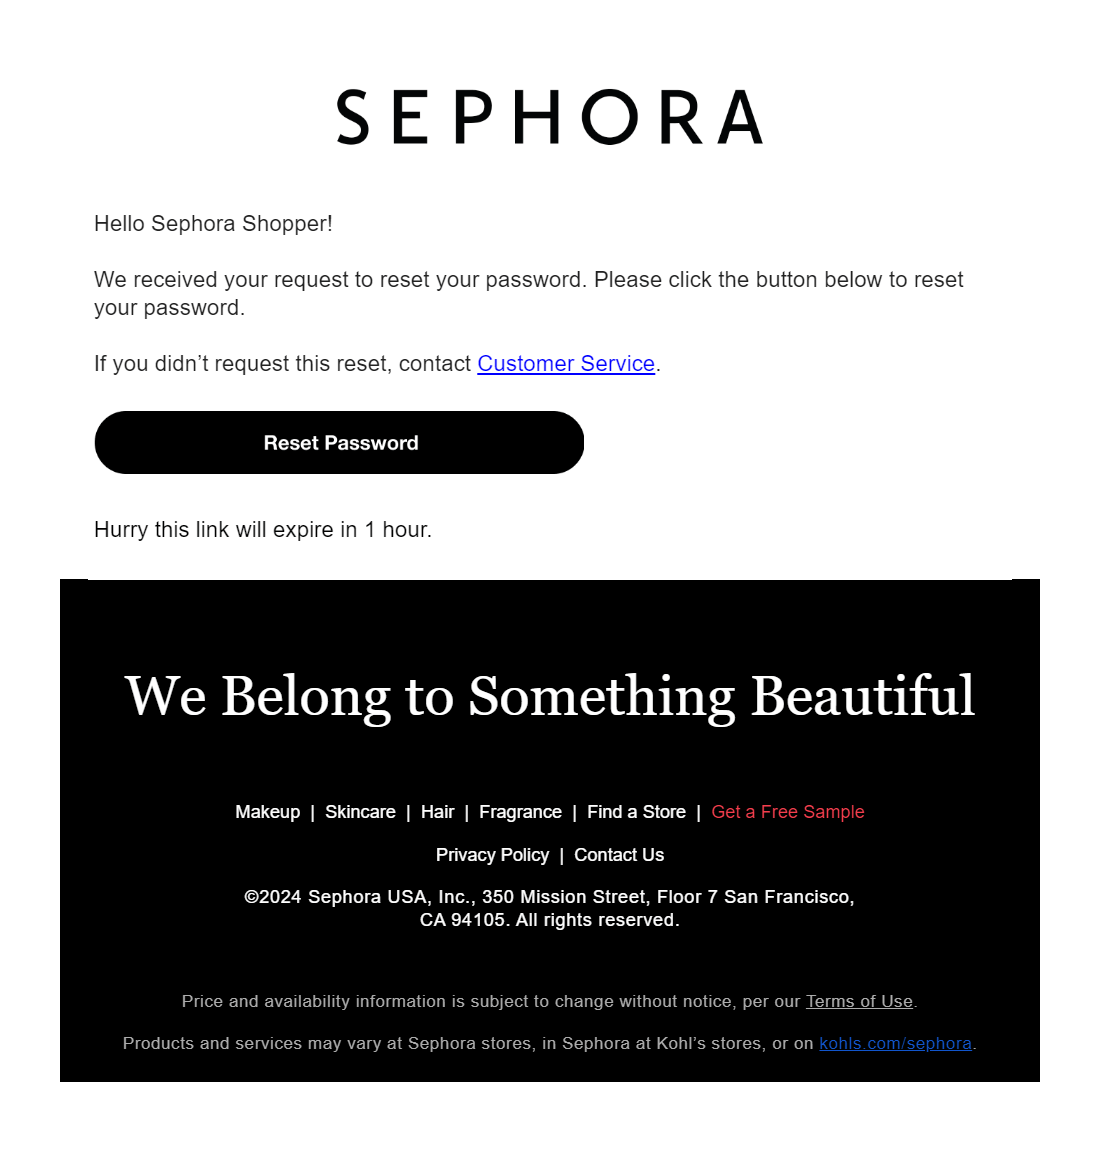 sephora transactional email example